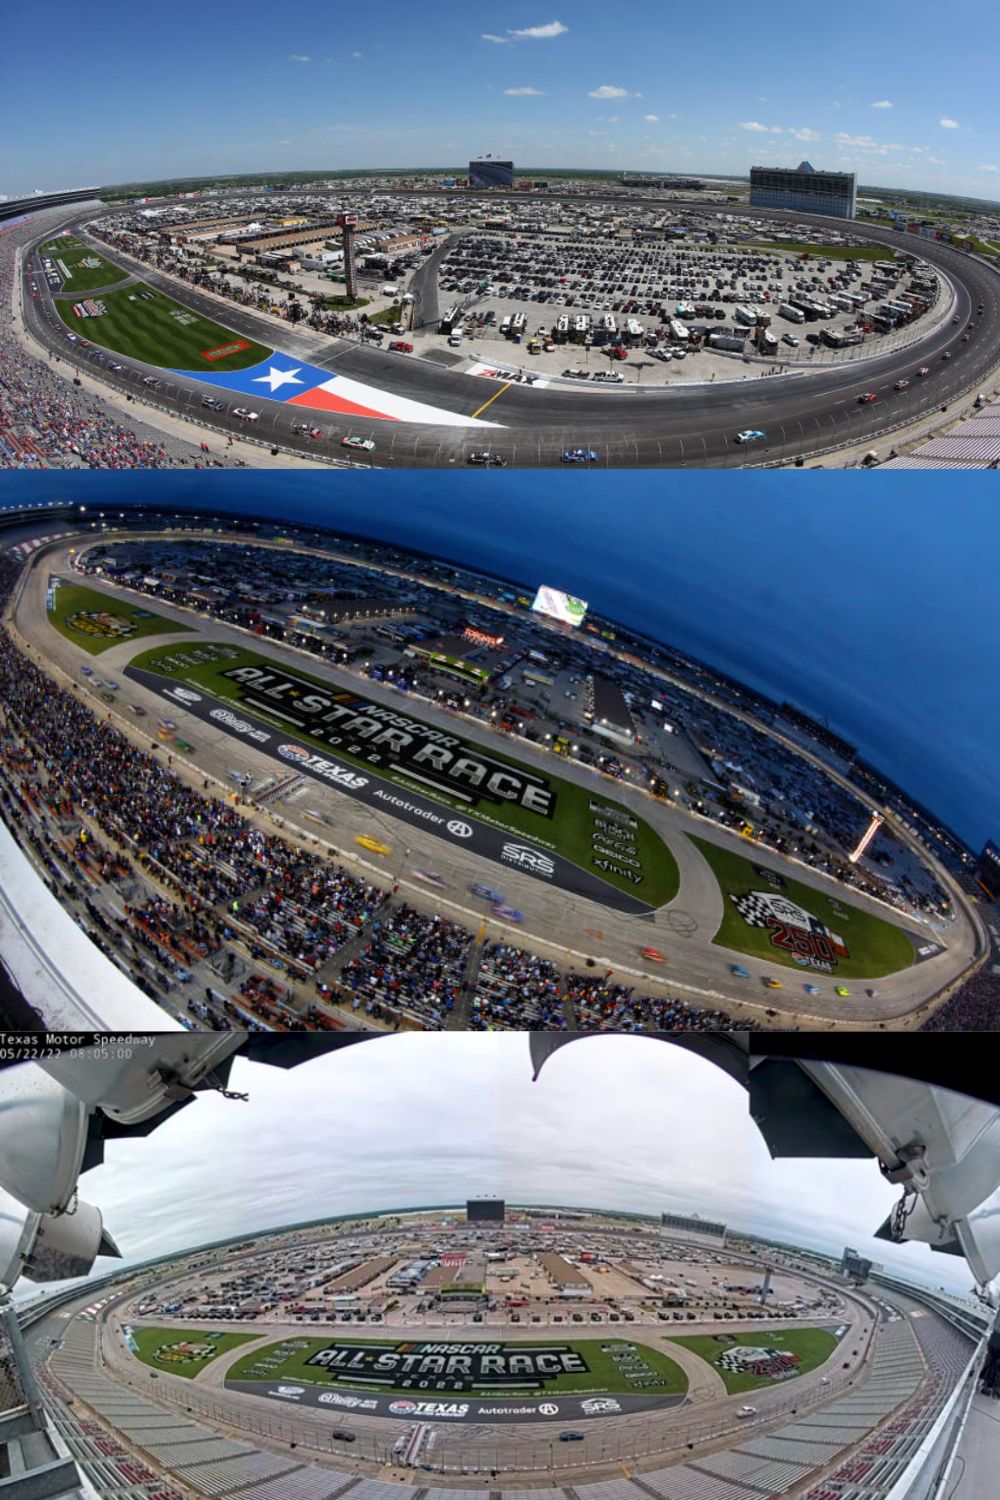 Texas Motor Speedway, The Lengthiest NASCAR RaceTrack